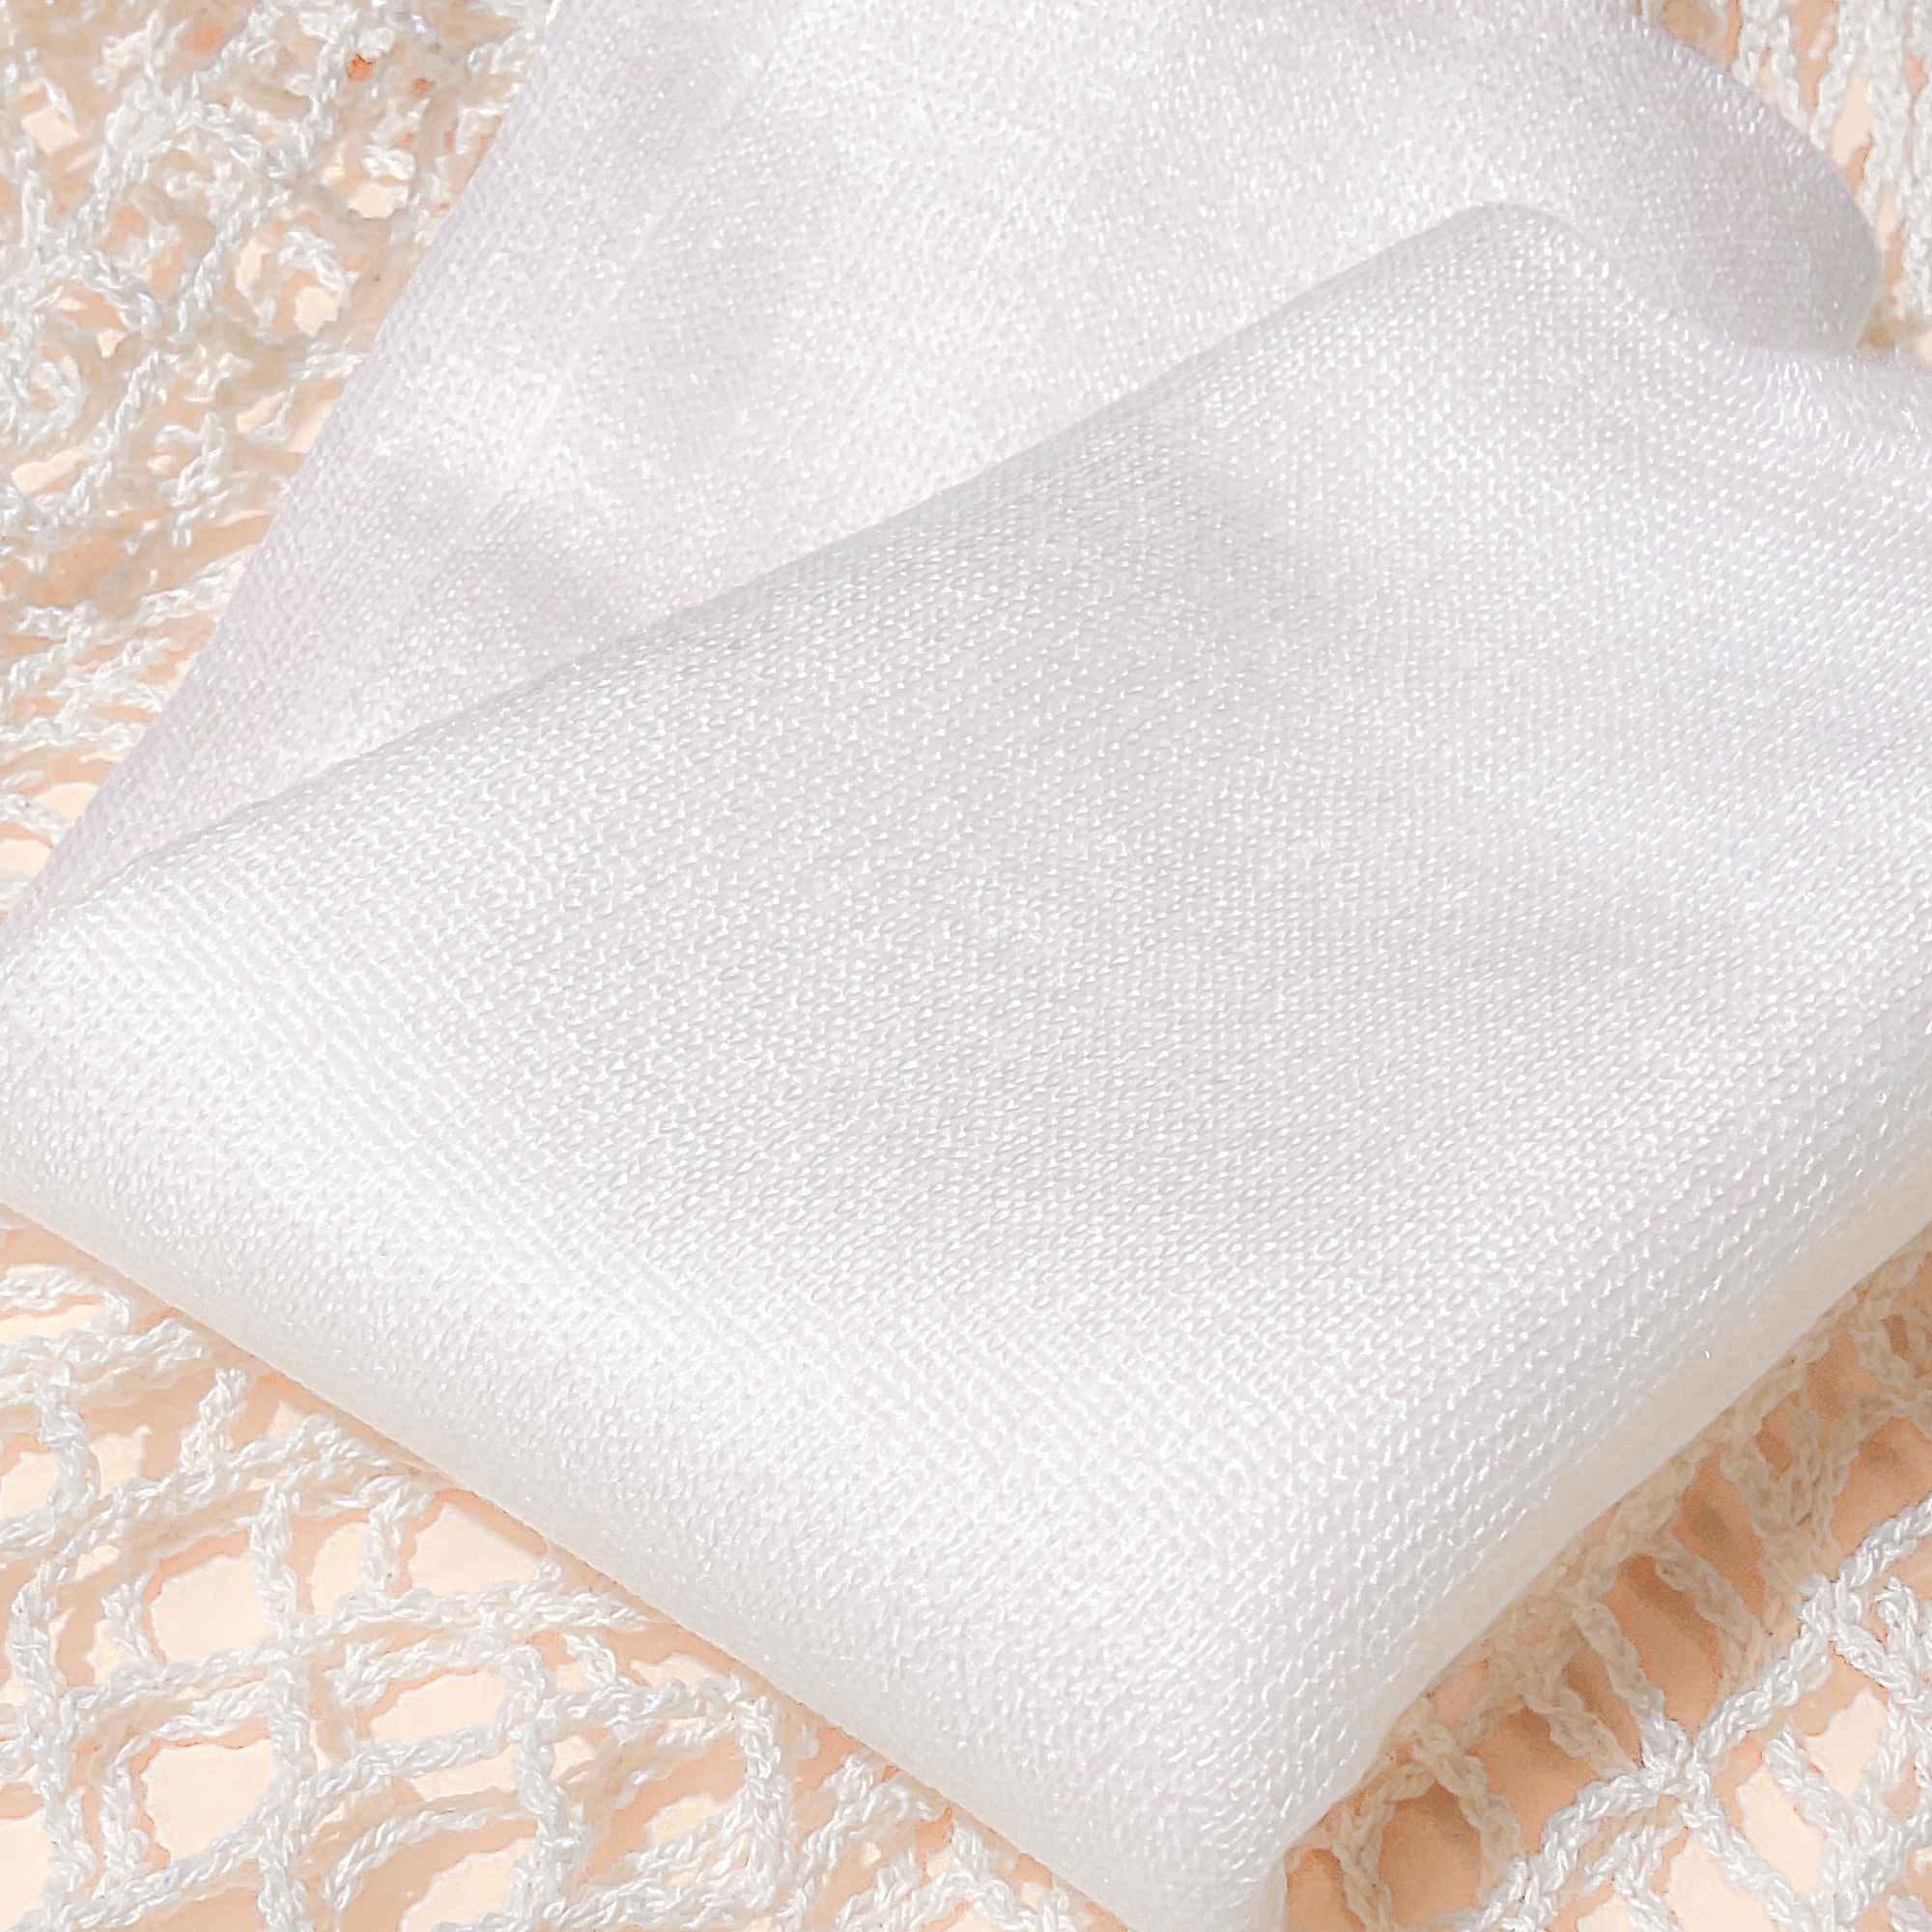 NEOGEN DERMALOGY Soft Touch Cotton Towel (1ea/5ea/10ea/20ea)